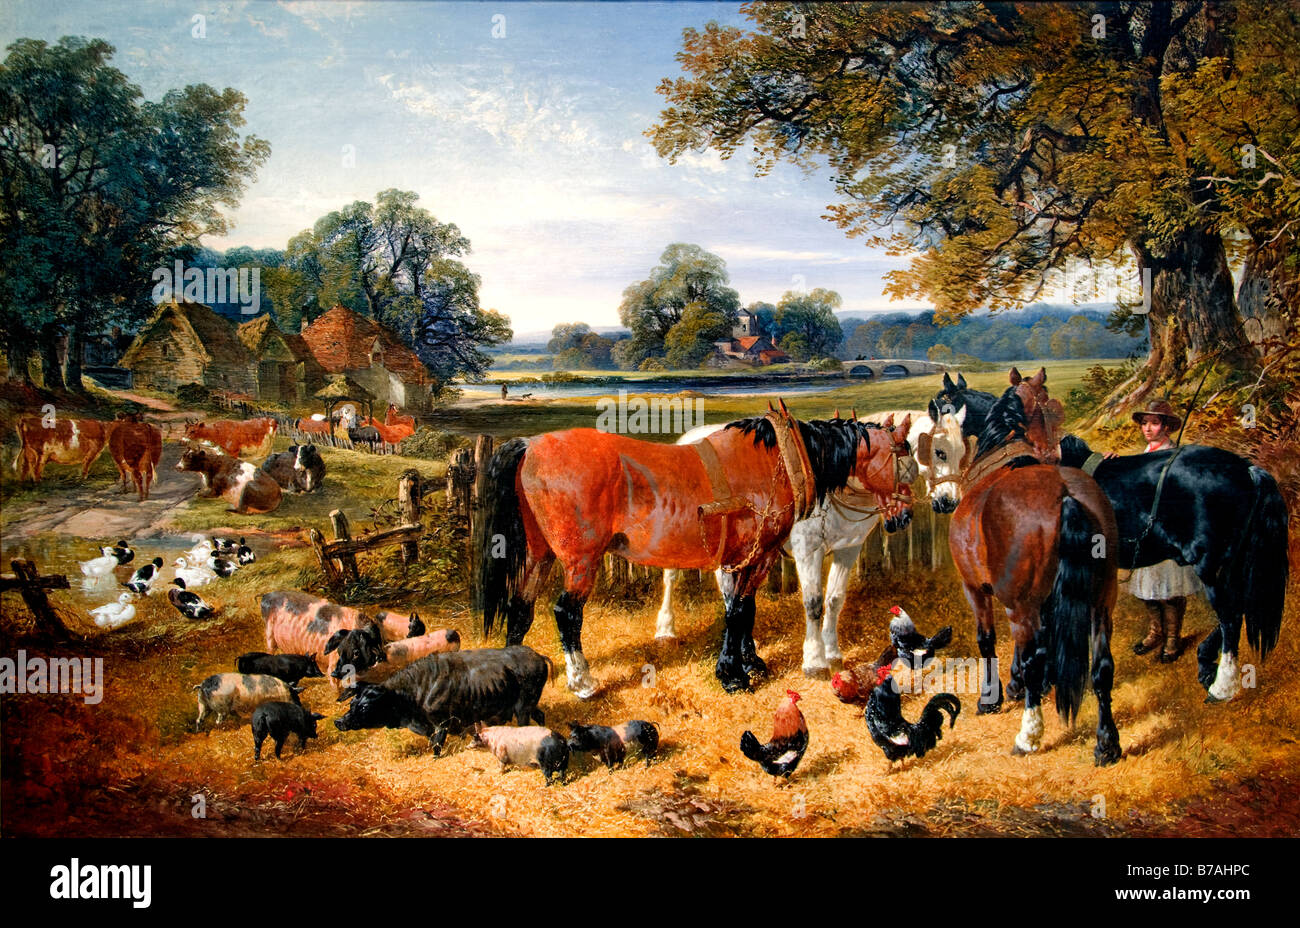 Willow Galery Duke Street Farmyard by John Frederick Herring 1859 London Stock Photo